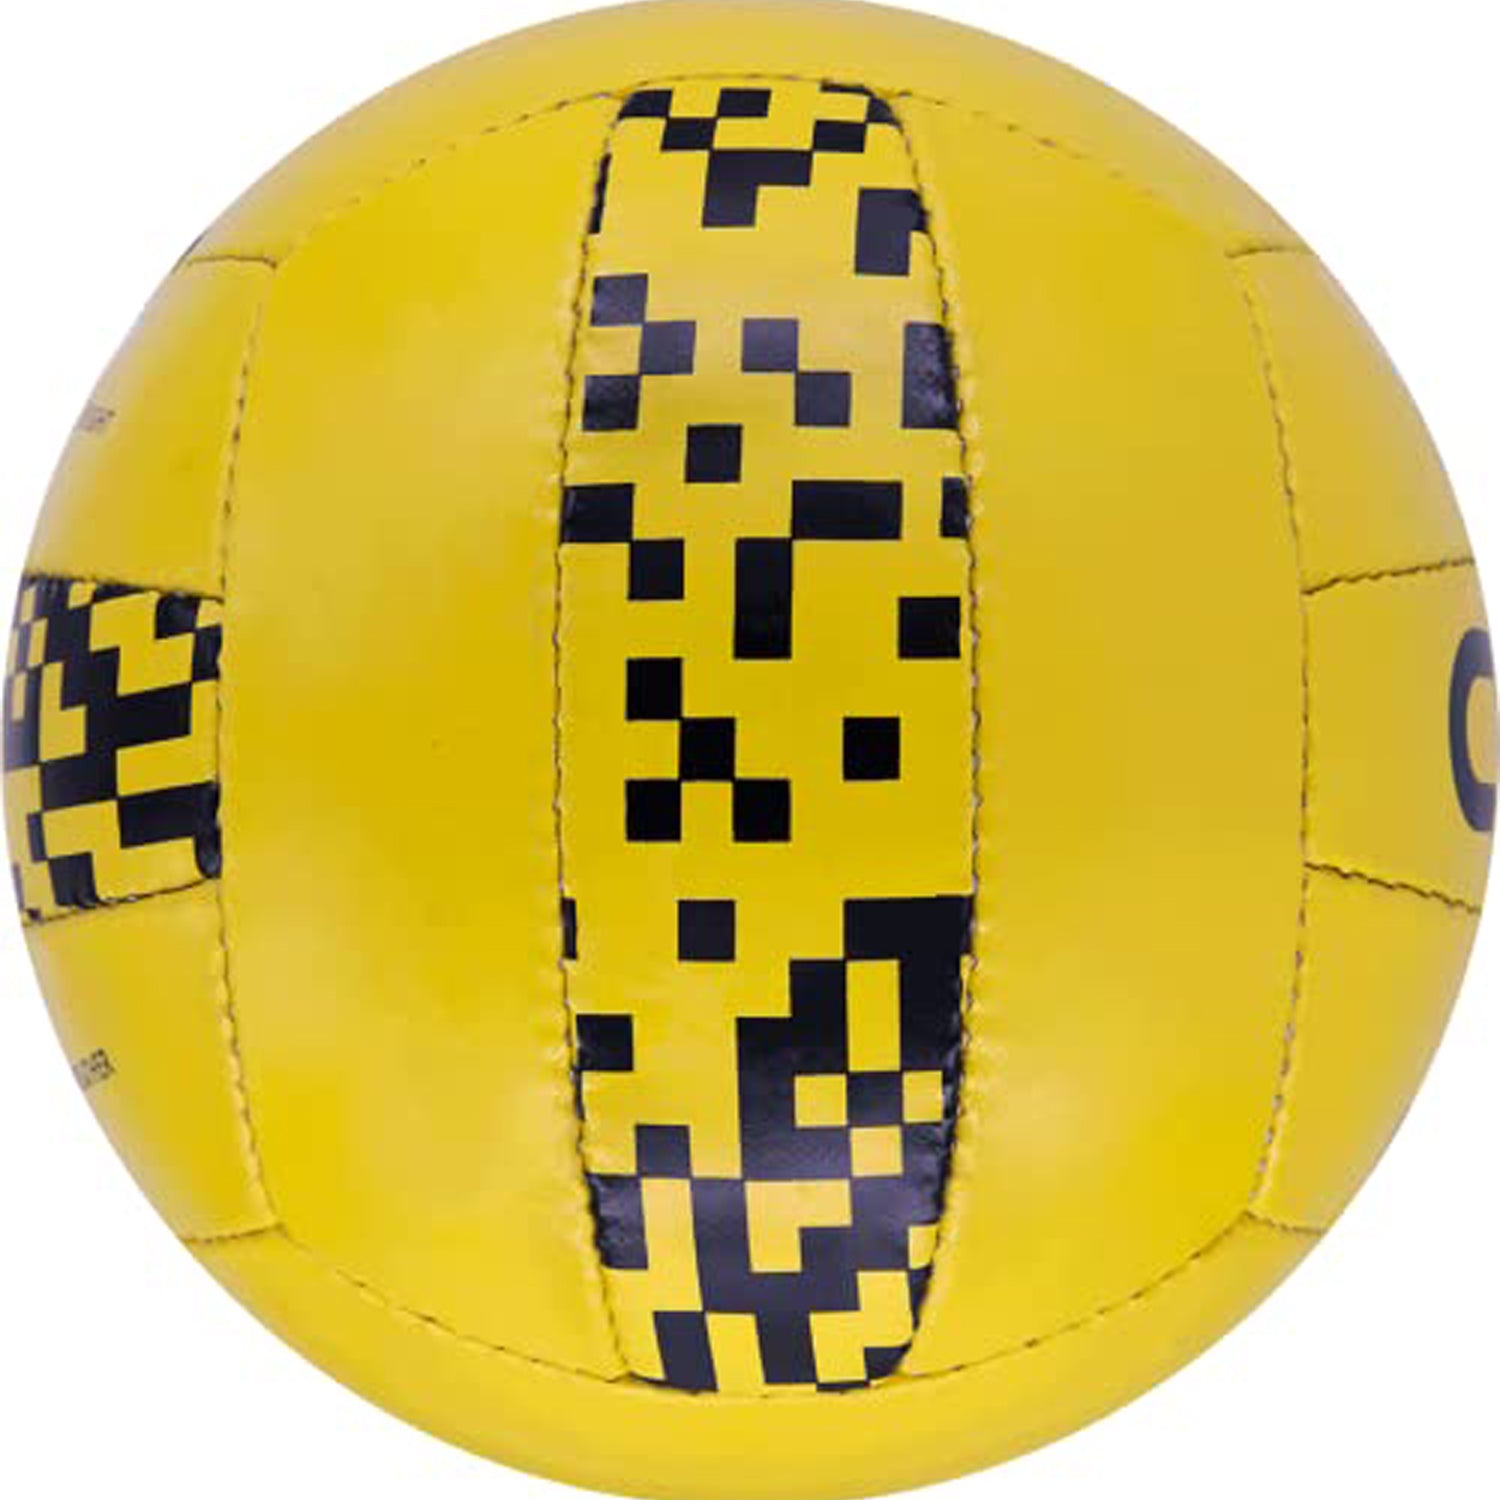 Cosco Astra Volleyball, Yellow (Size 4) - Best Price online Prokicksports.com